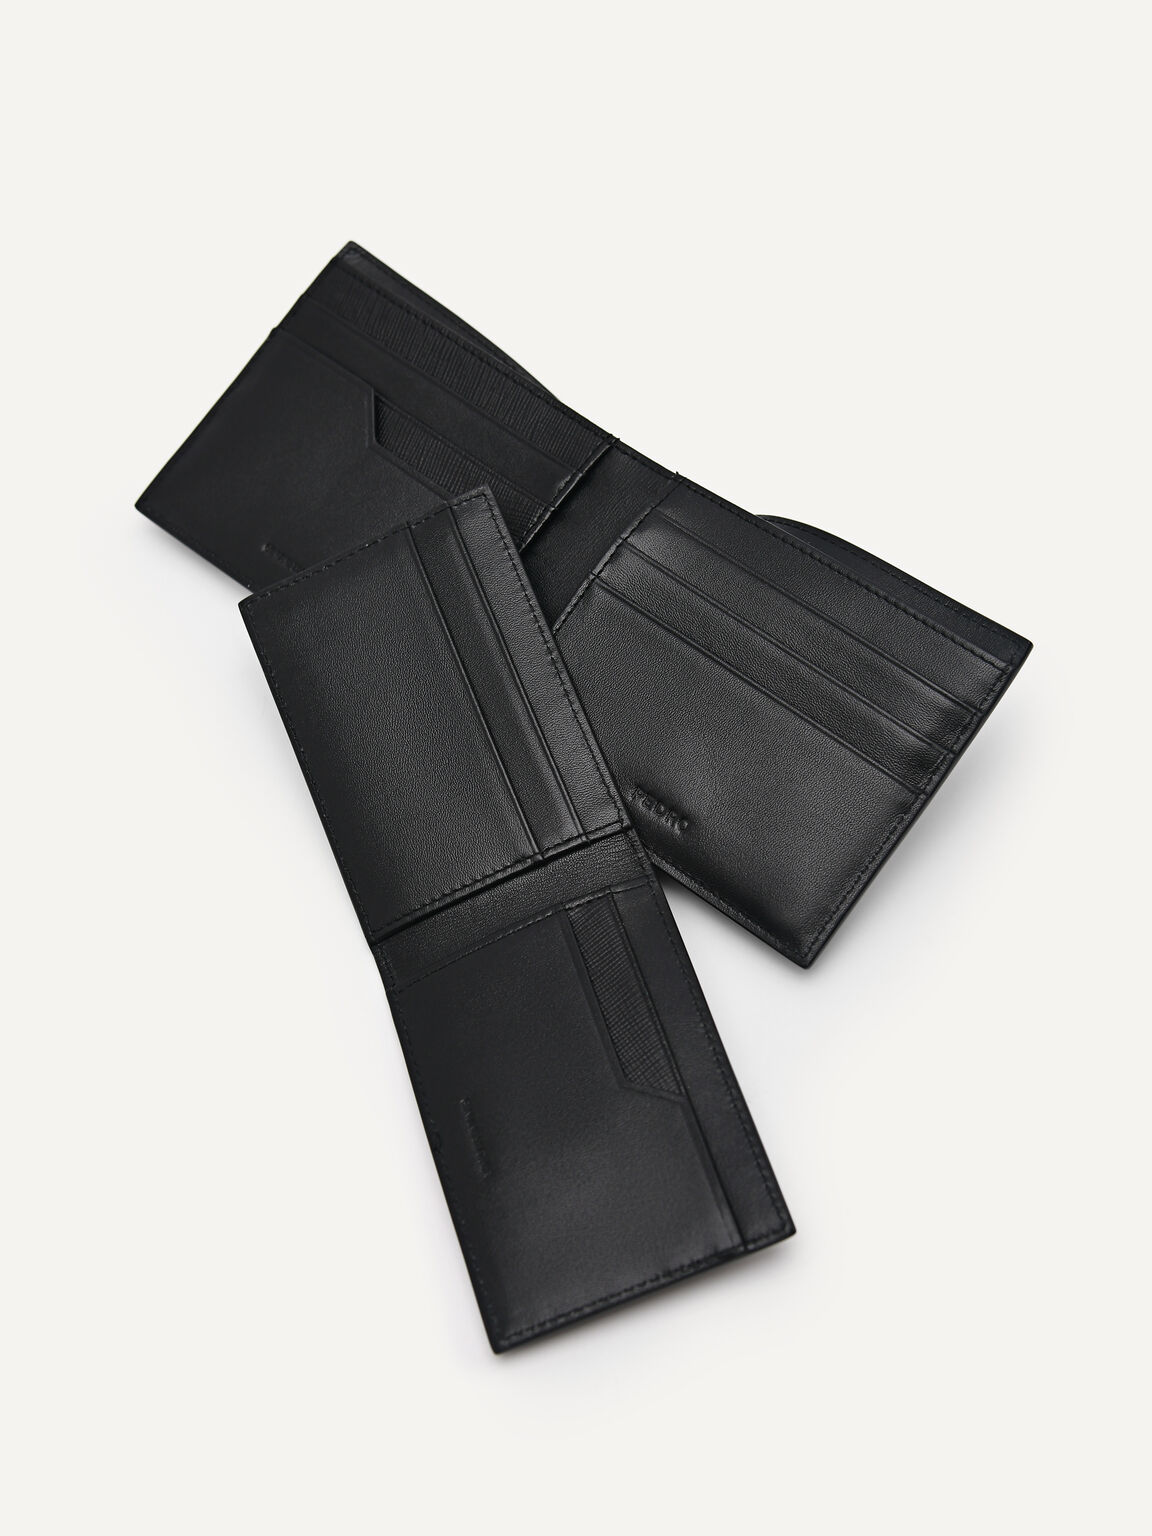 Embossed Leather Bi-Fold Wallet with Insert, Black, hi-res